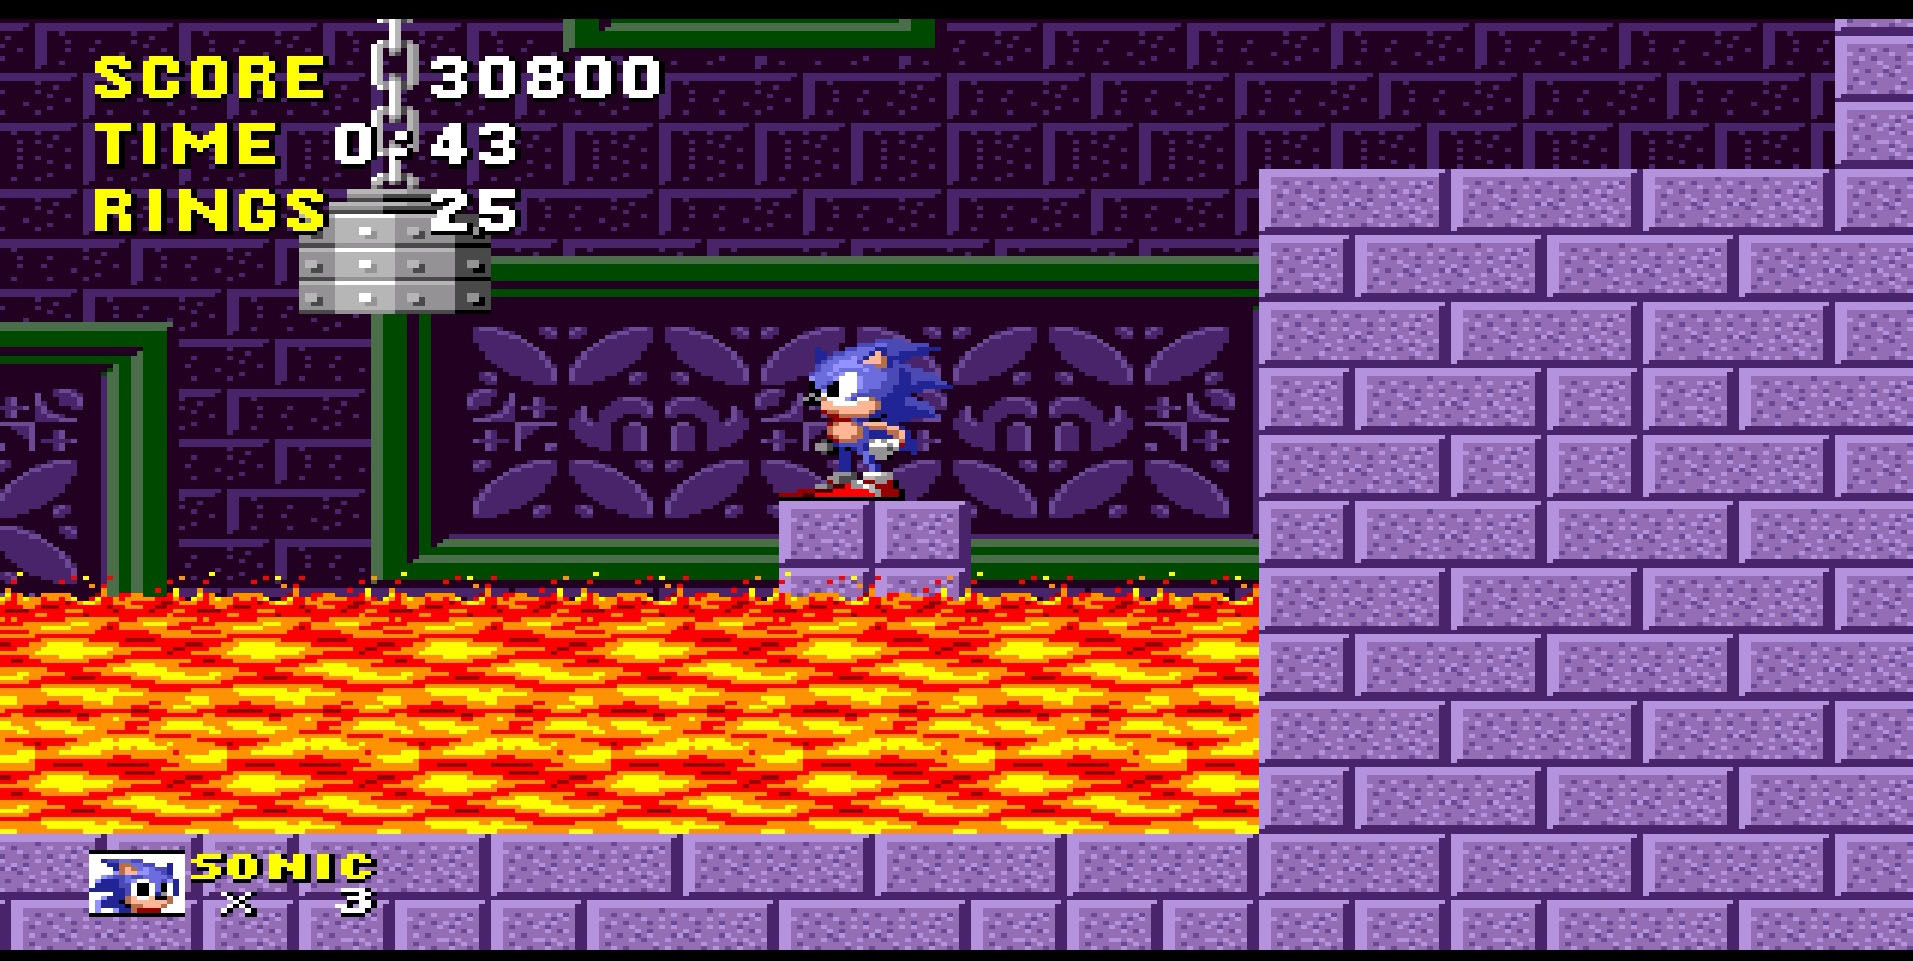 Sonic the Hedgehog - VGDB - Vídeo Game Data Base